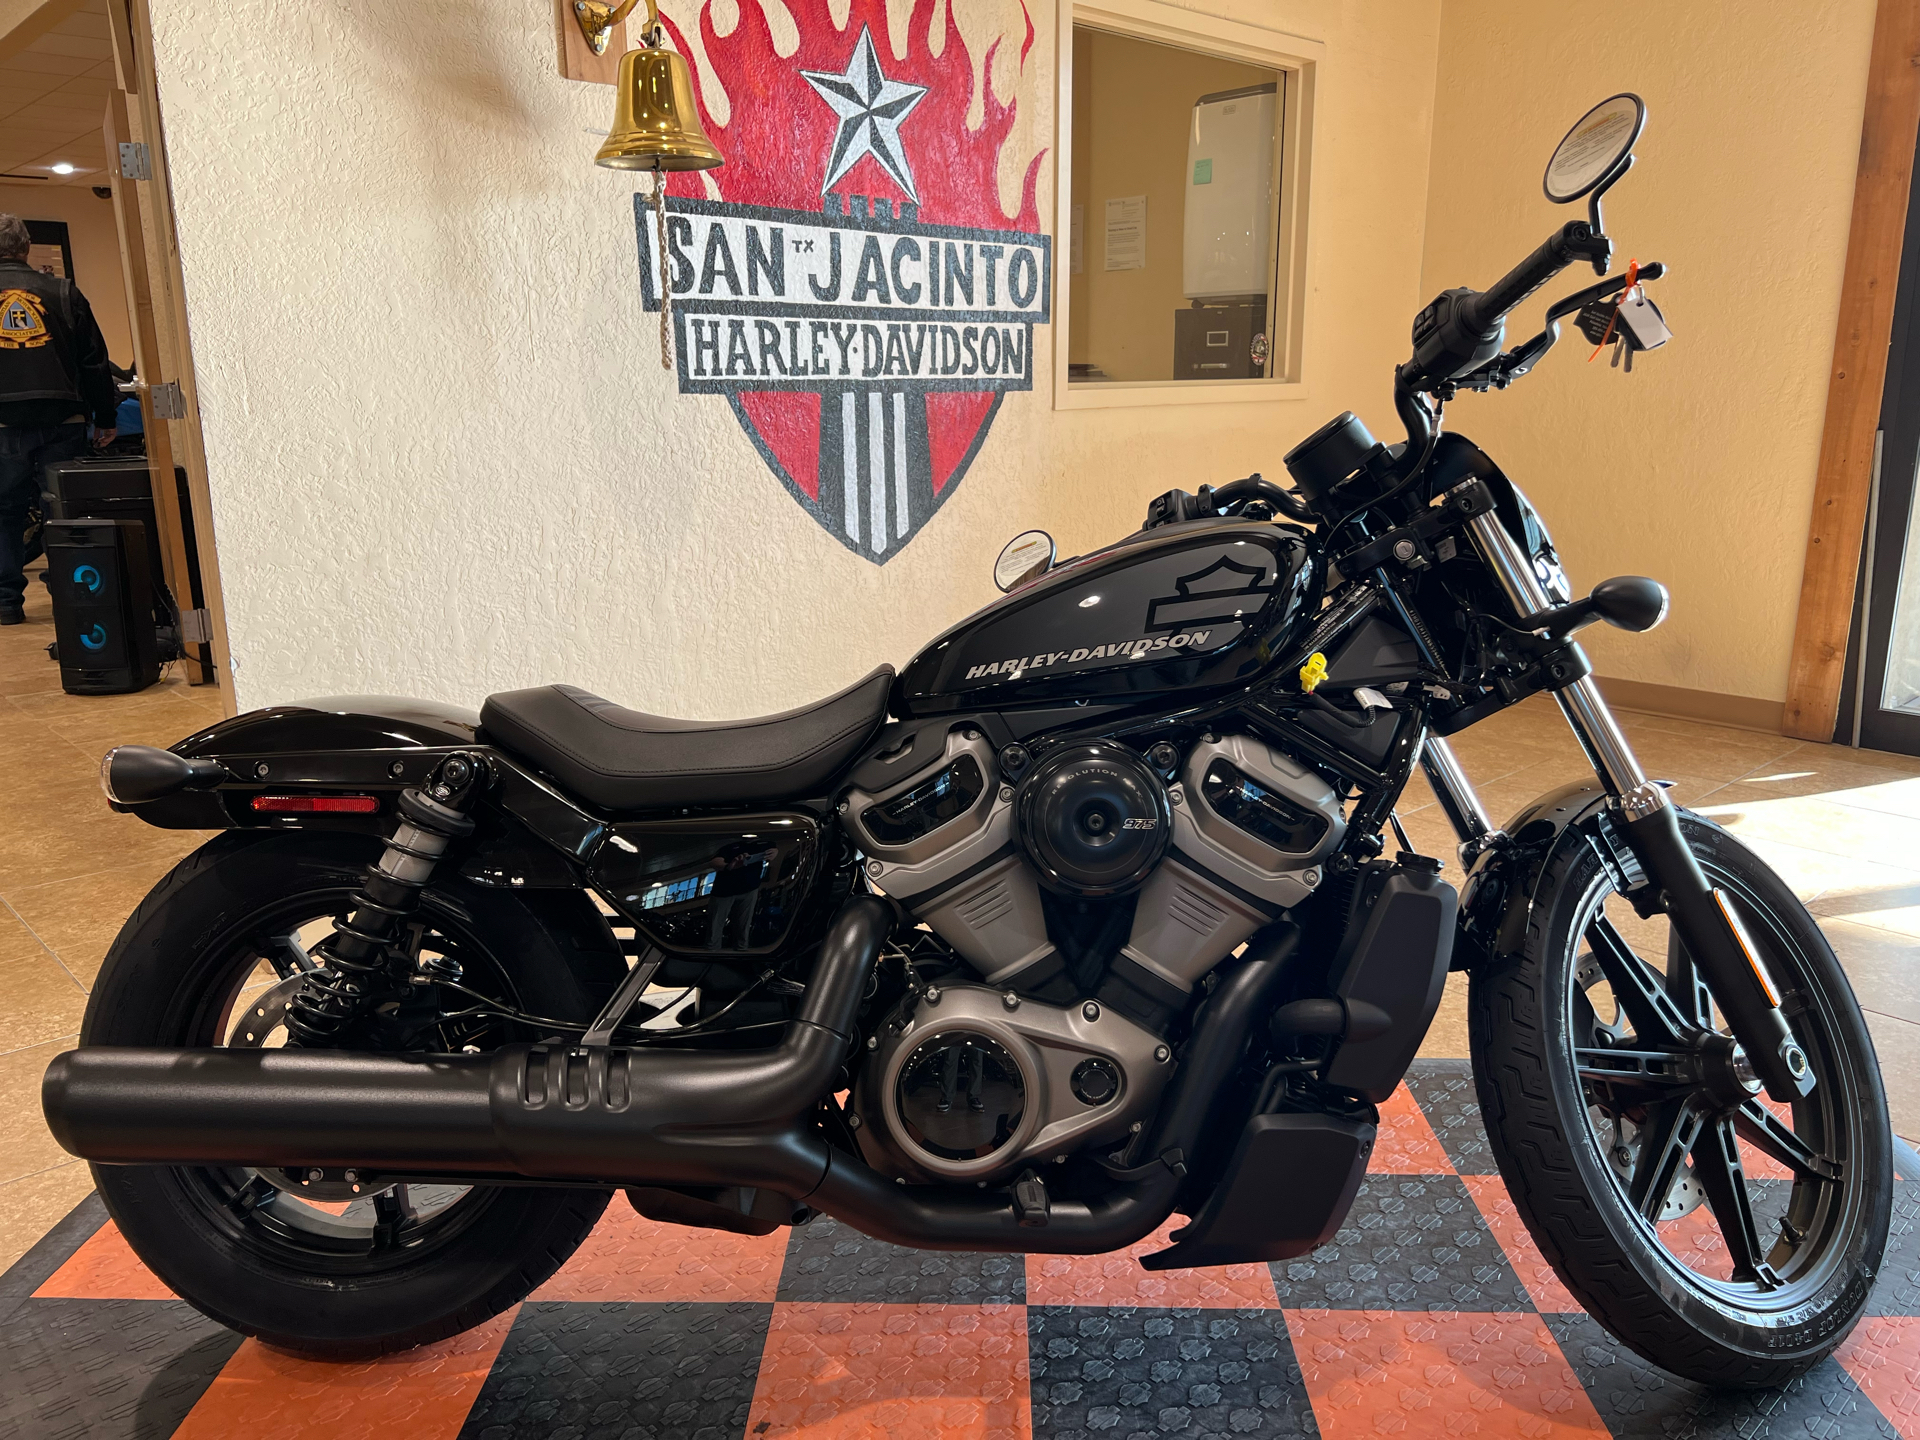 2022 Harley-Davidson Nightster™ in Pasadena, Texas